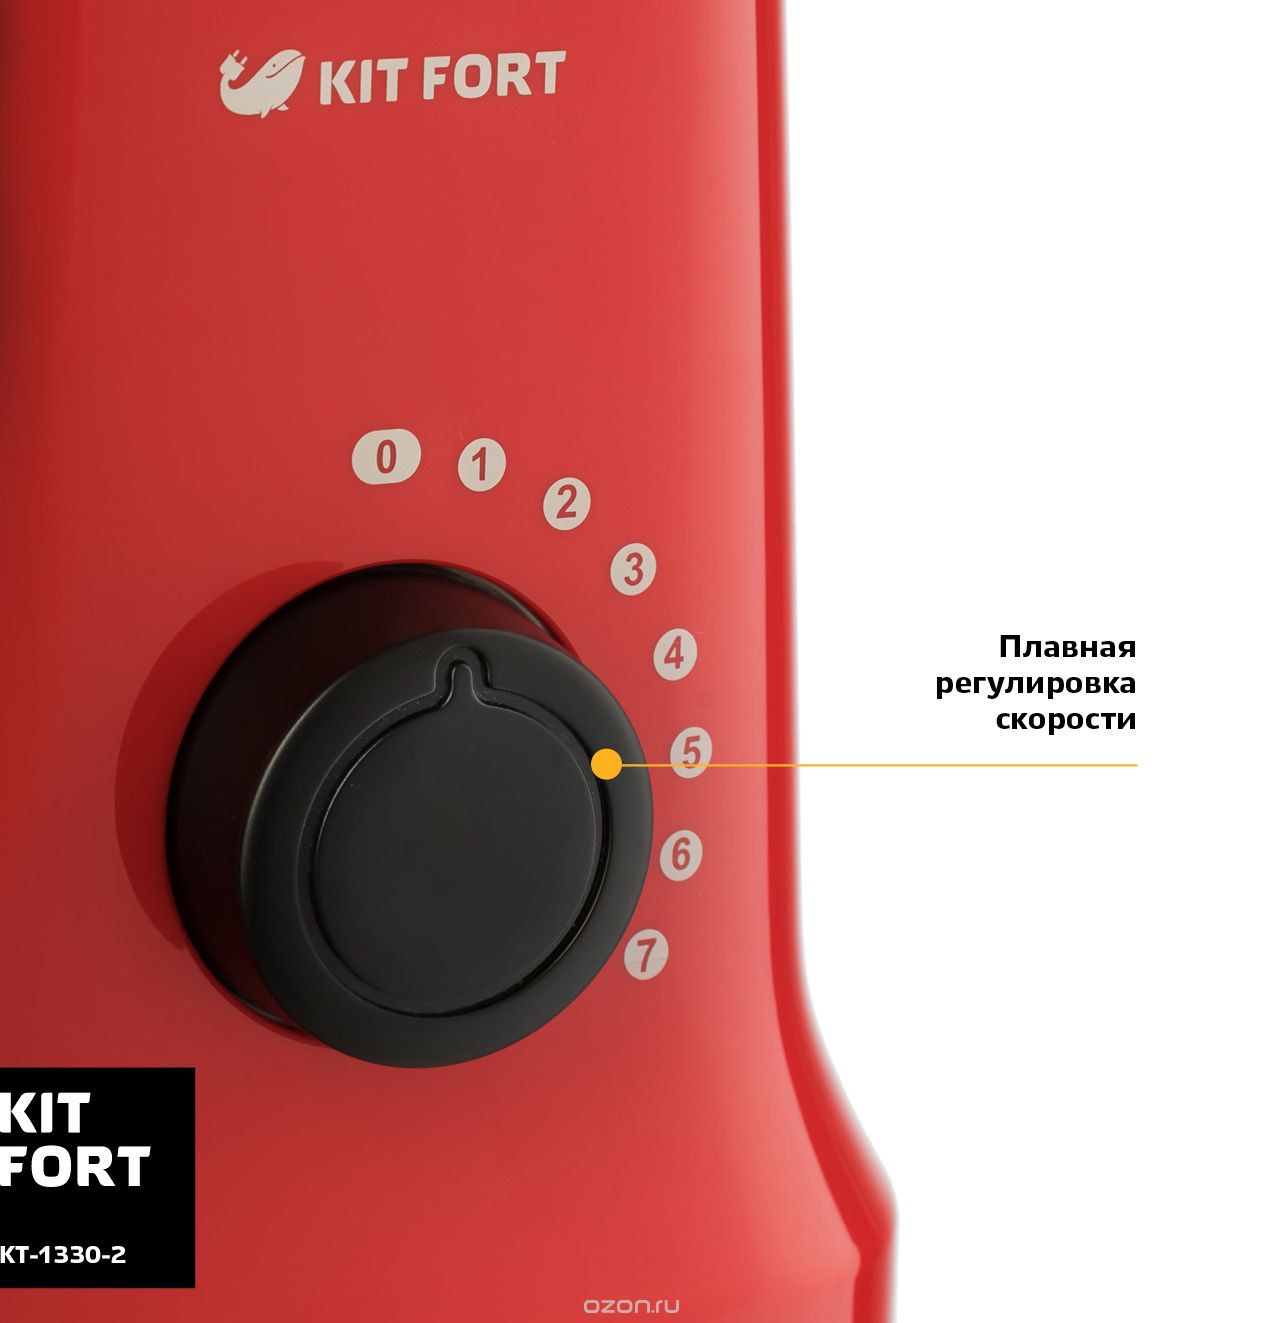  Kitfort -1330-2, Red 